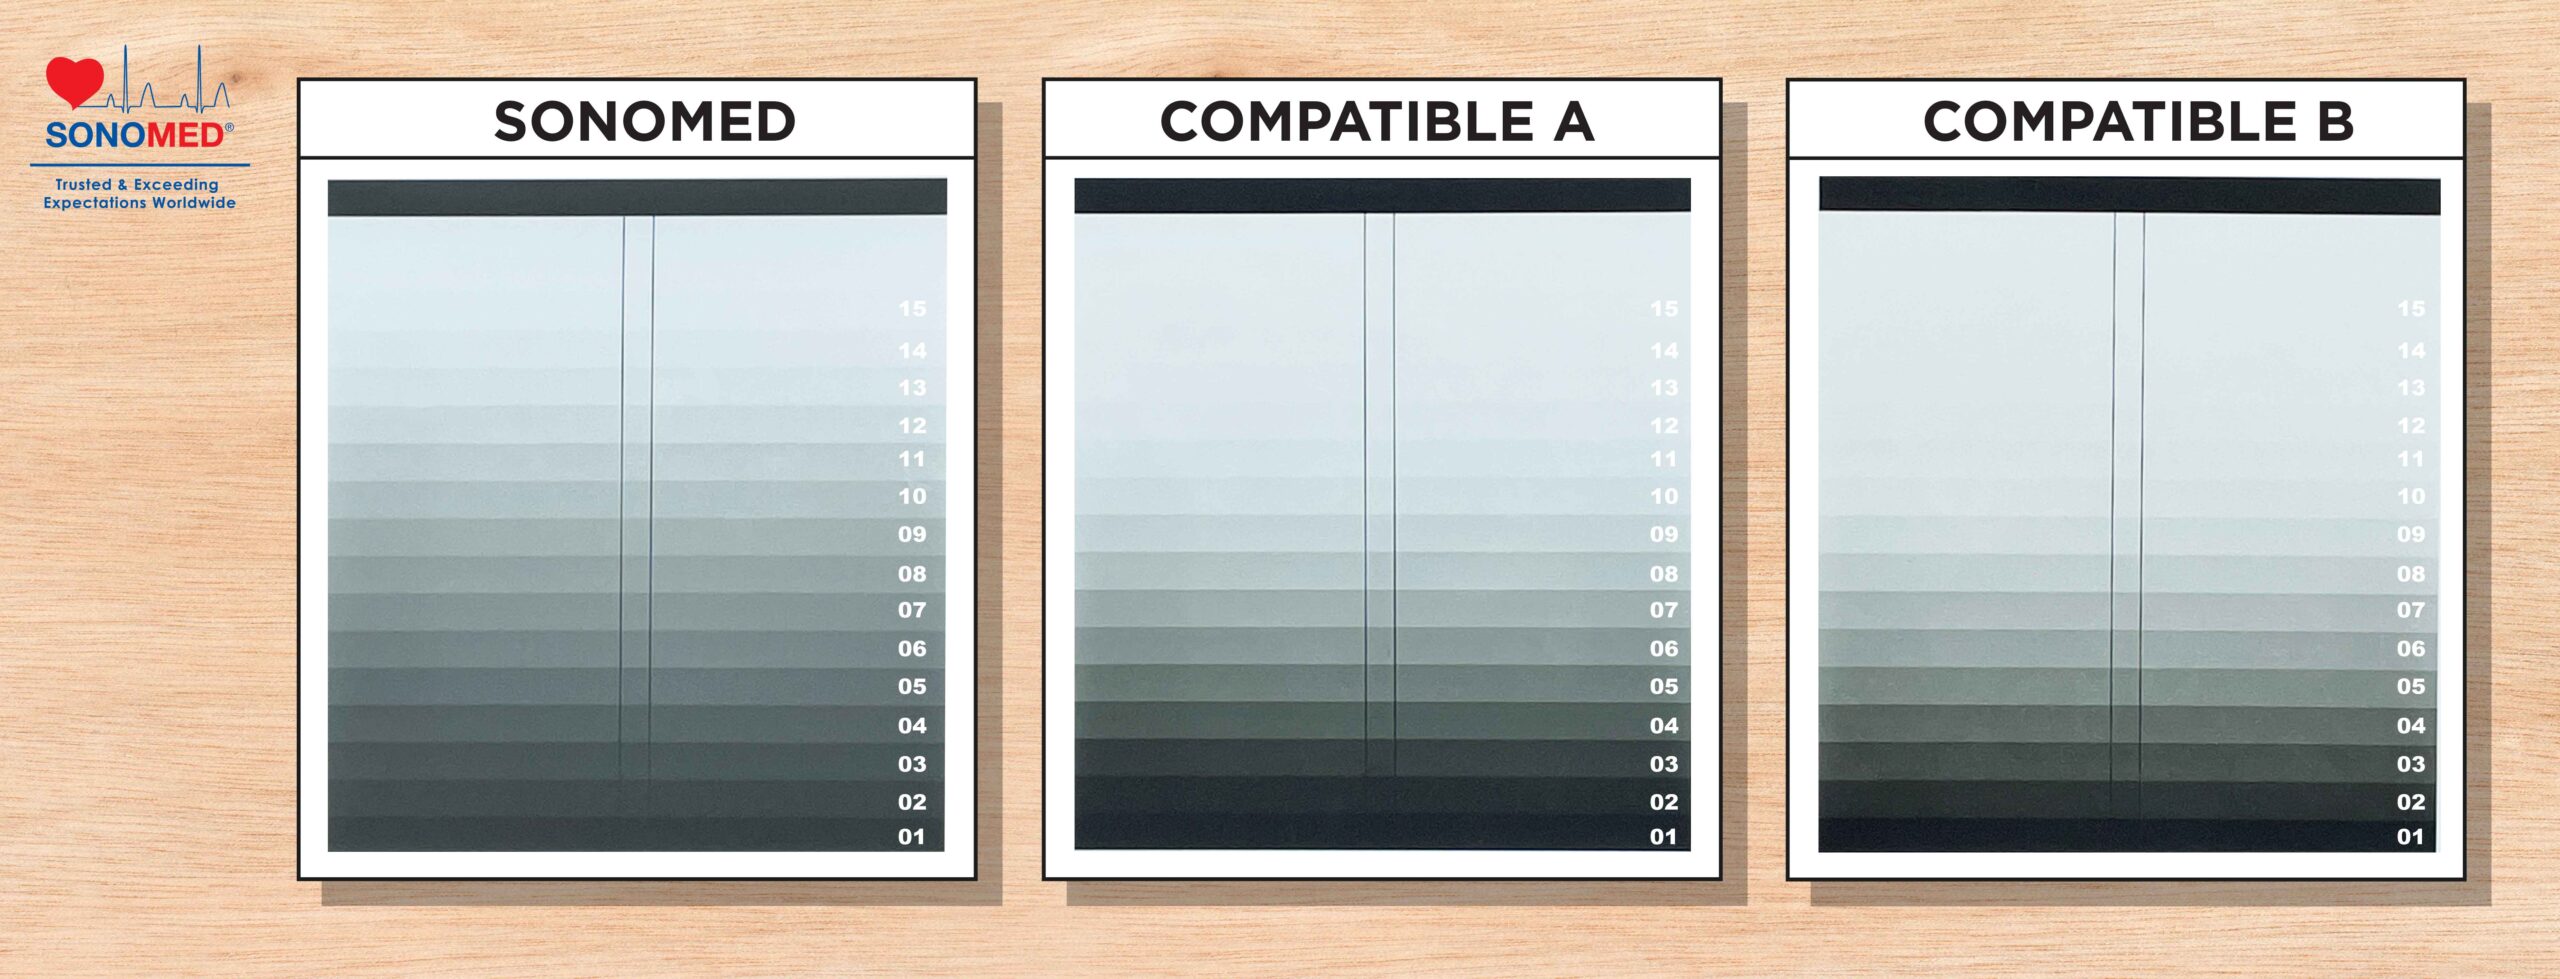 ultrasound paper comparison Sonomed vs Compatibles